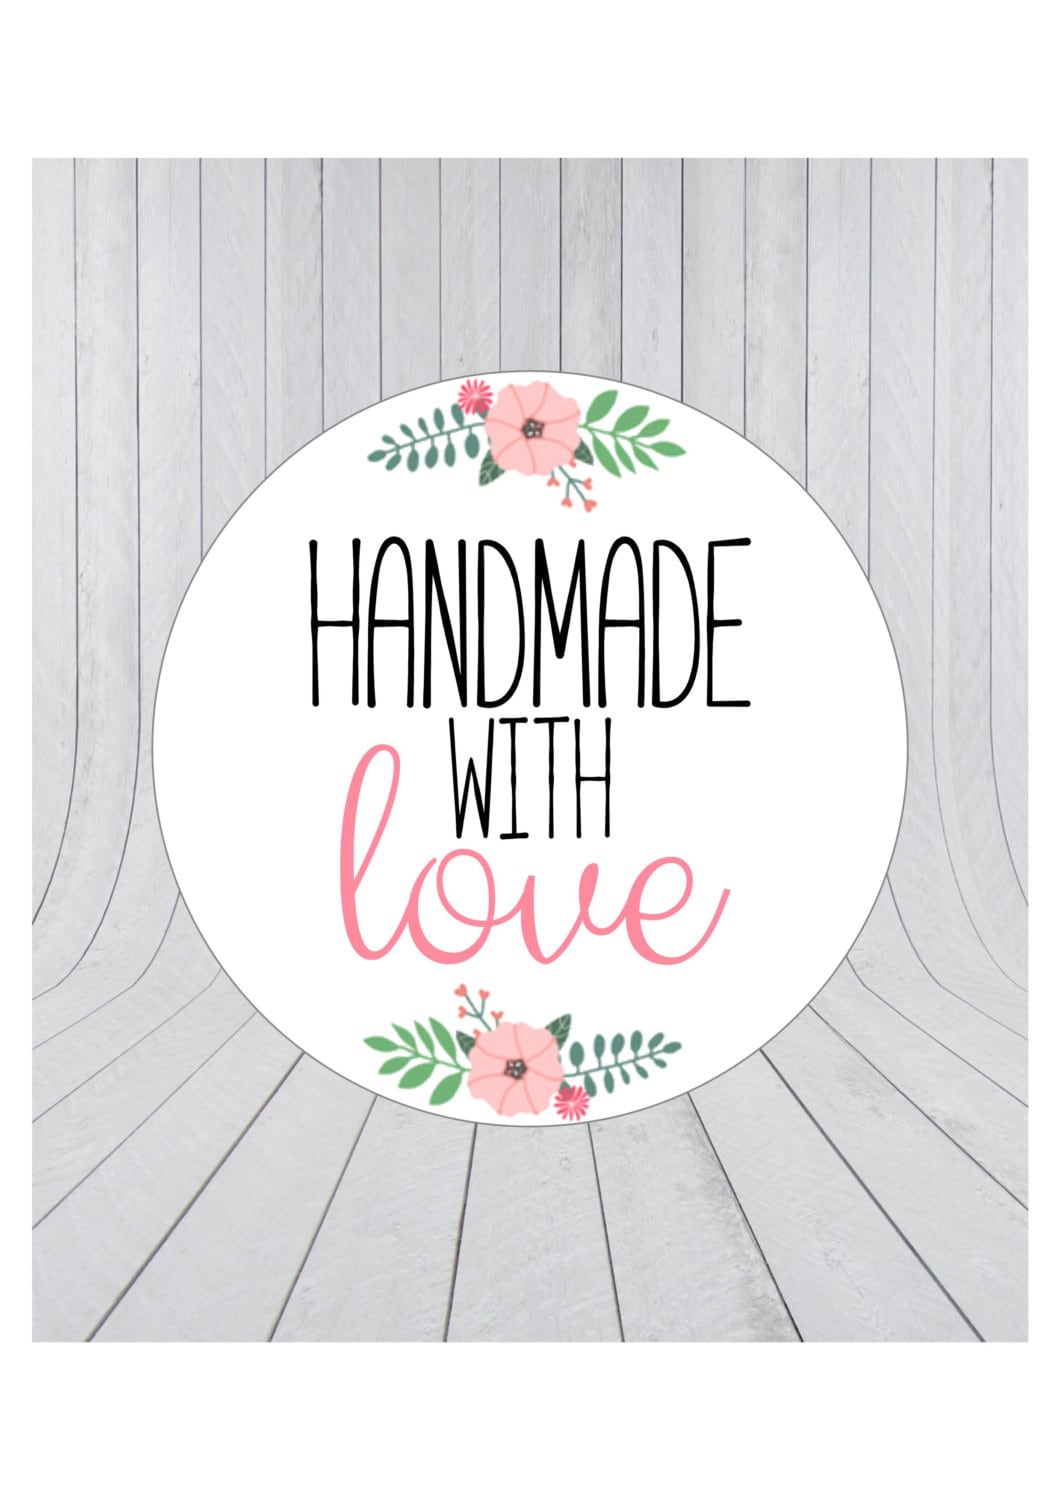 Handmade with love stickers handmade stickers handmade with
